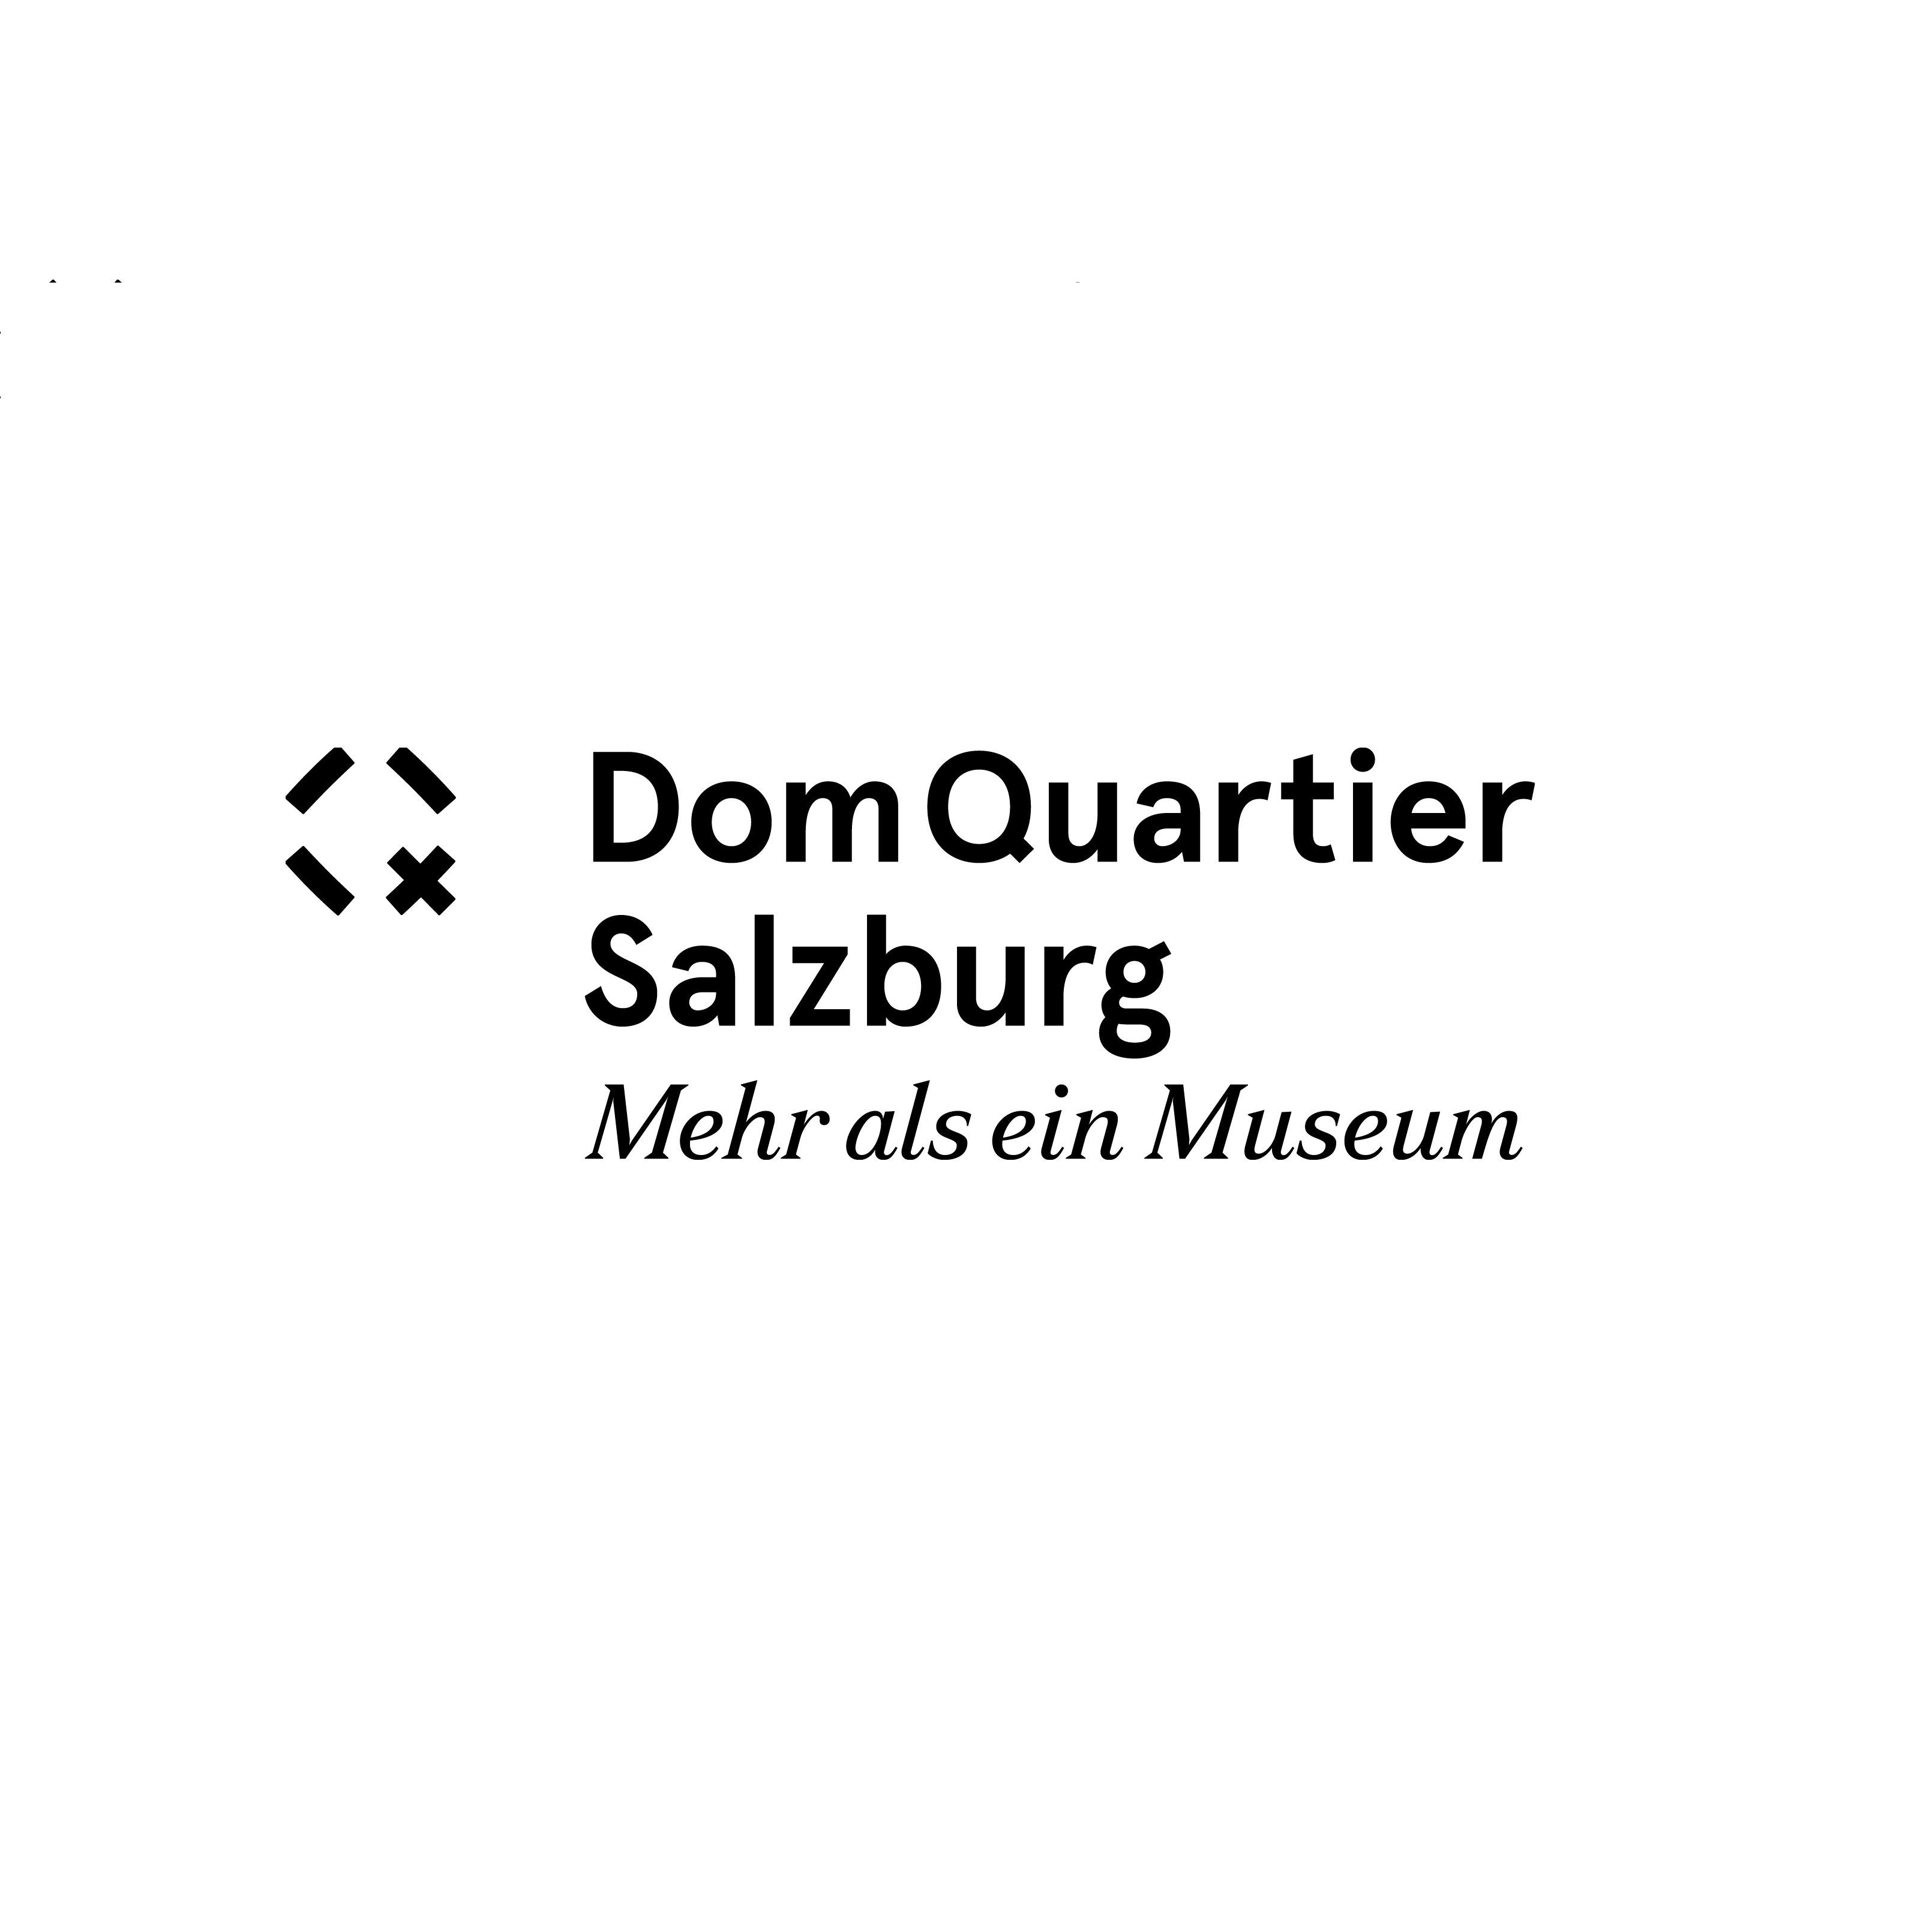 DomQuartier Salzburg